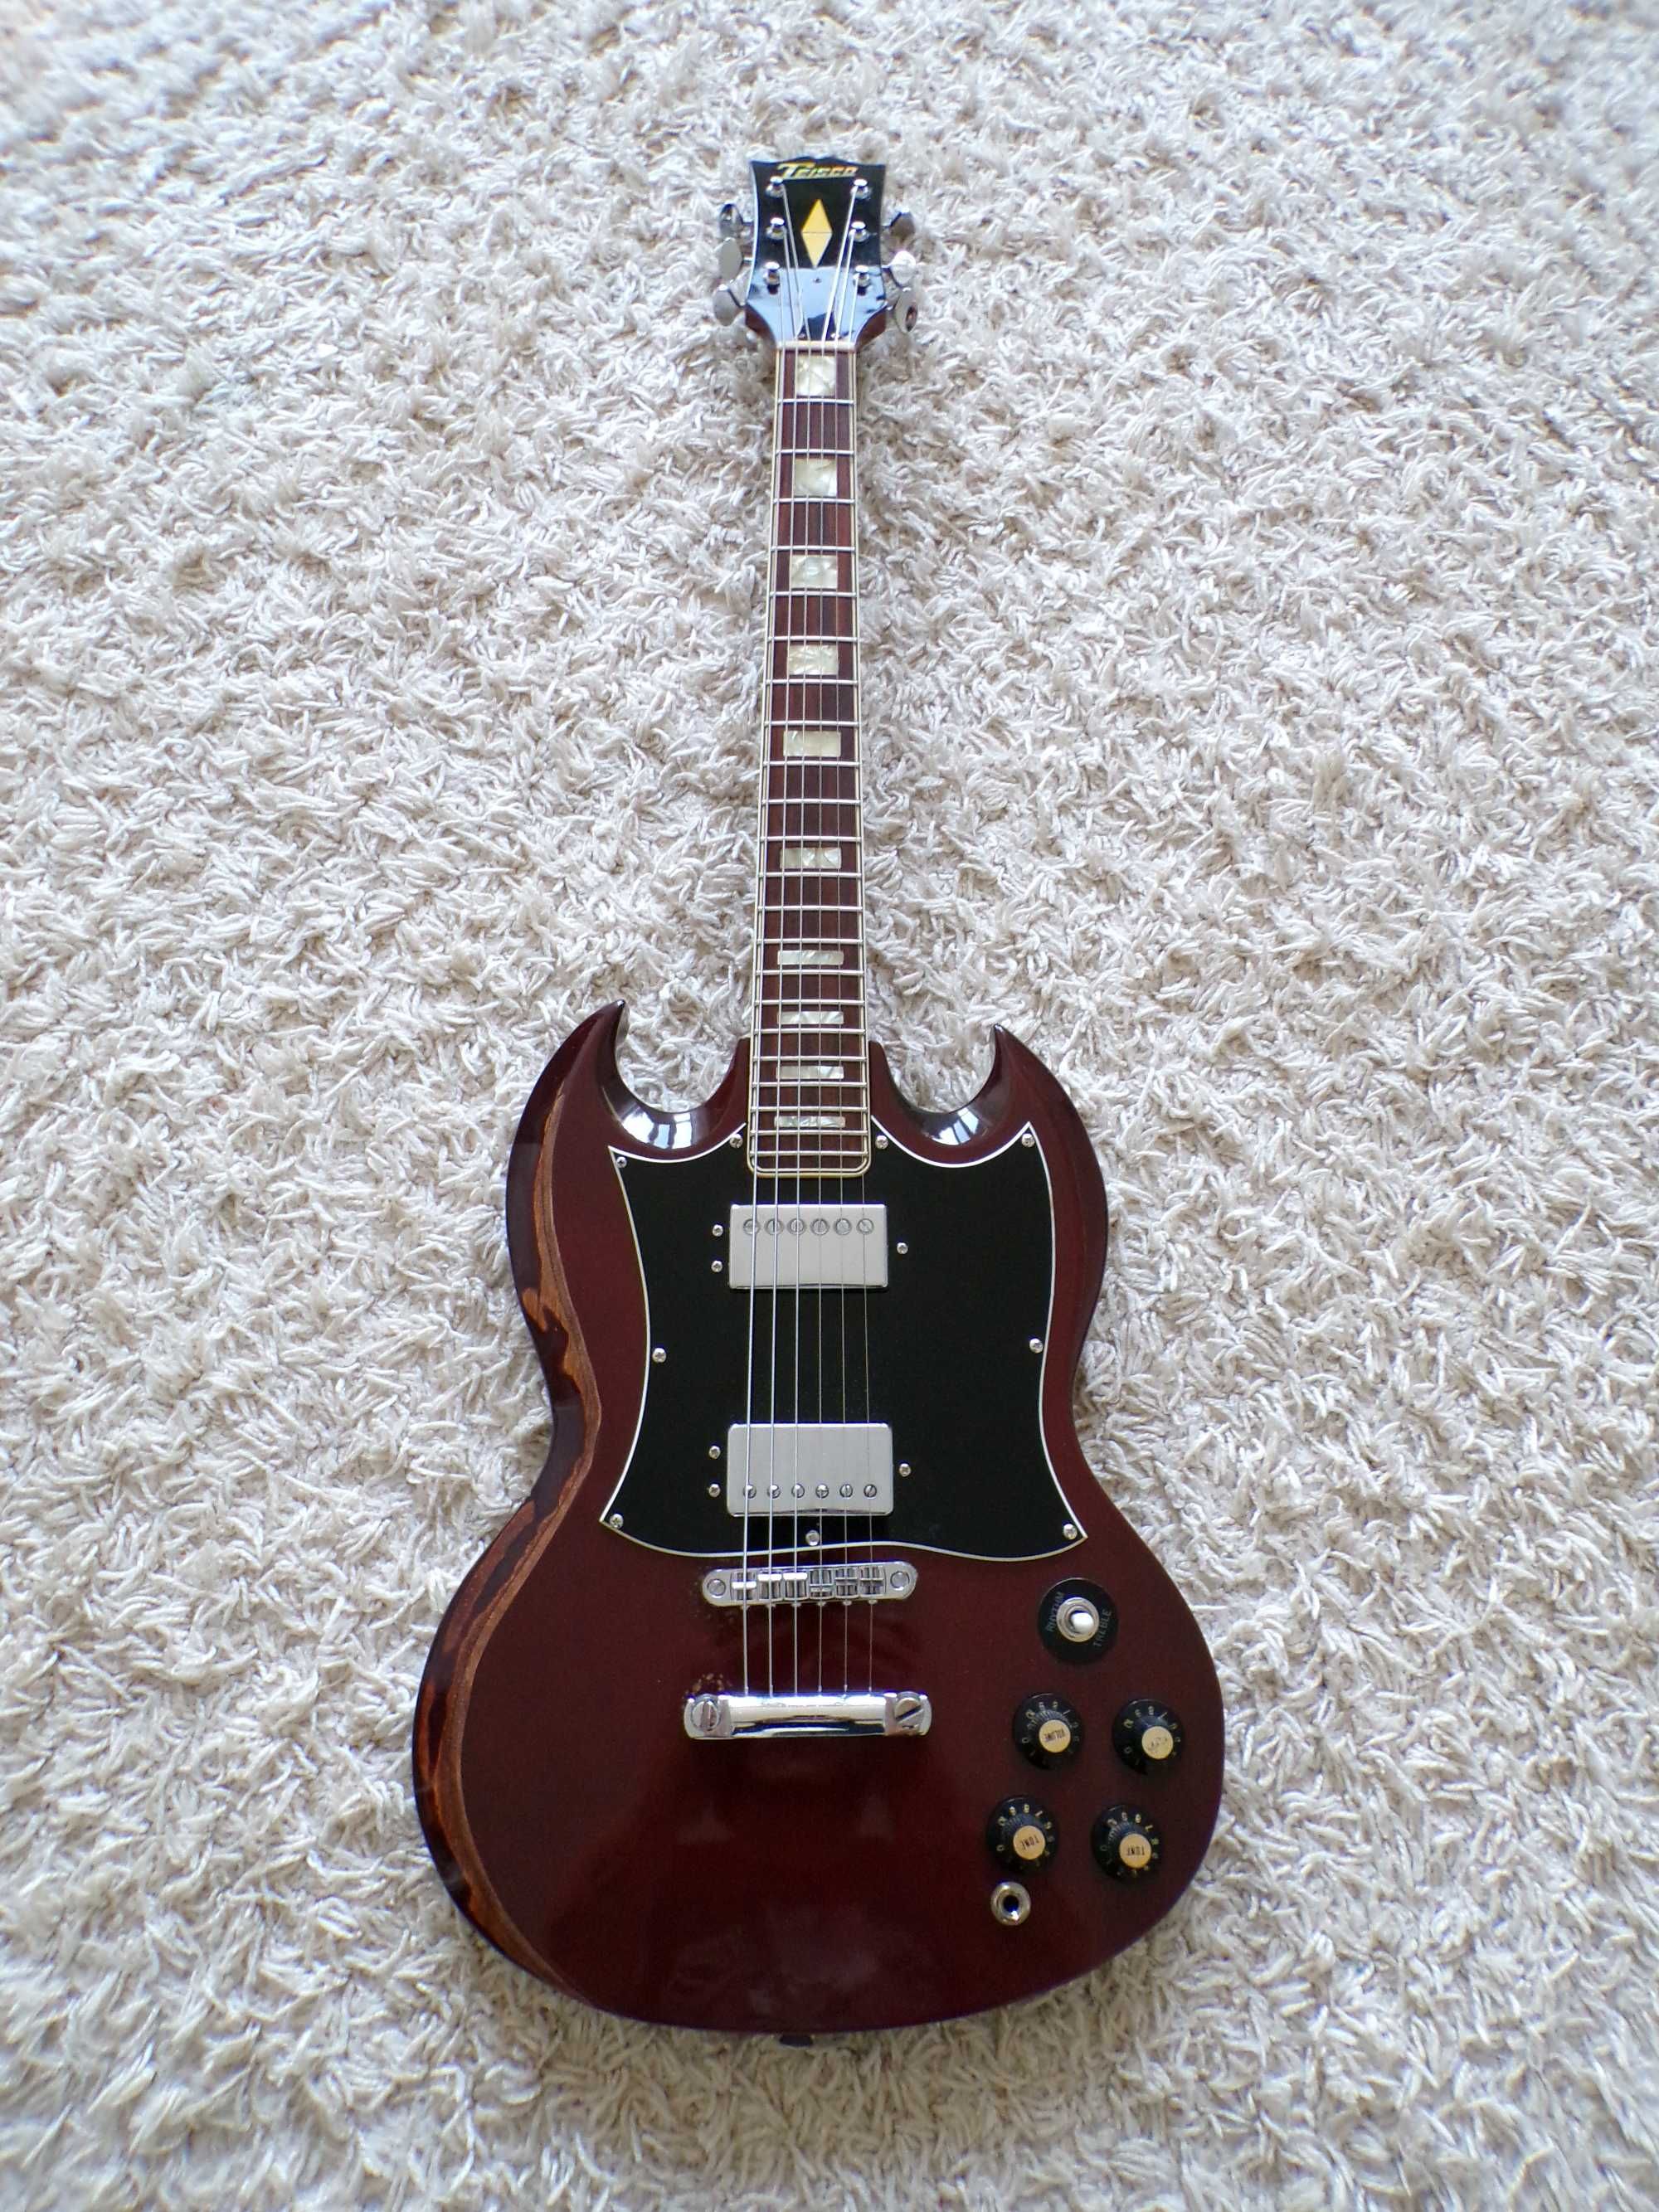 SG TEISCO guitar made in japan